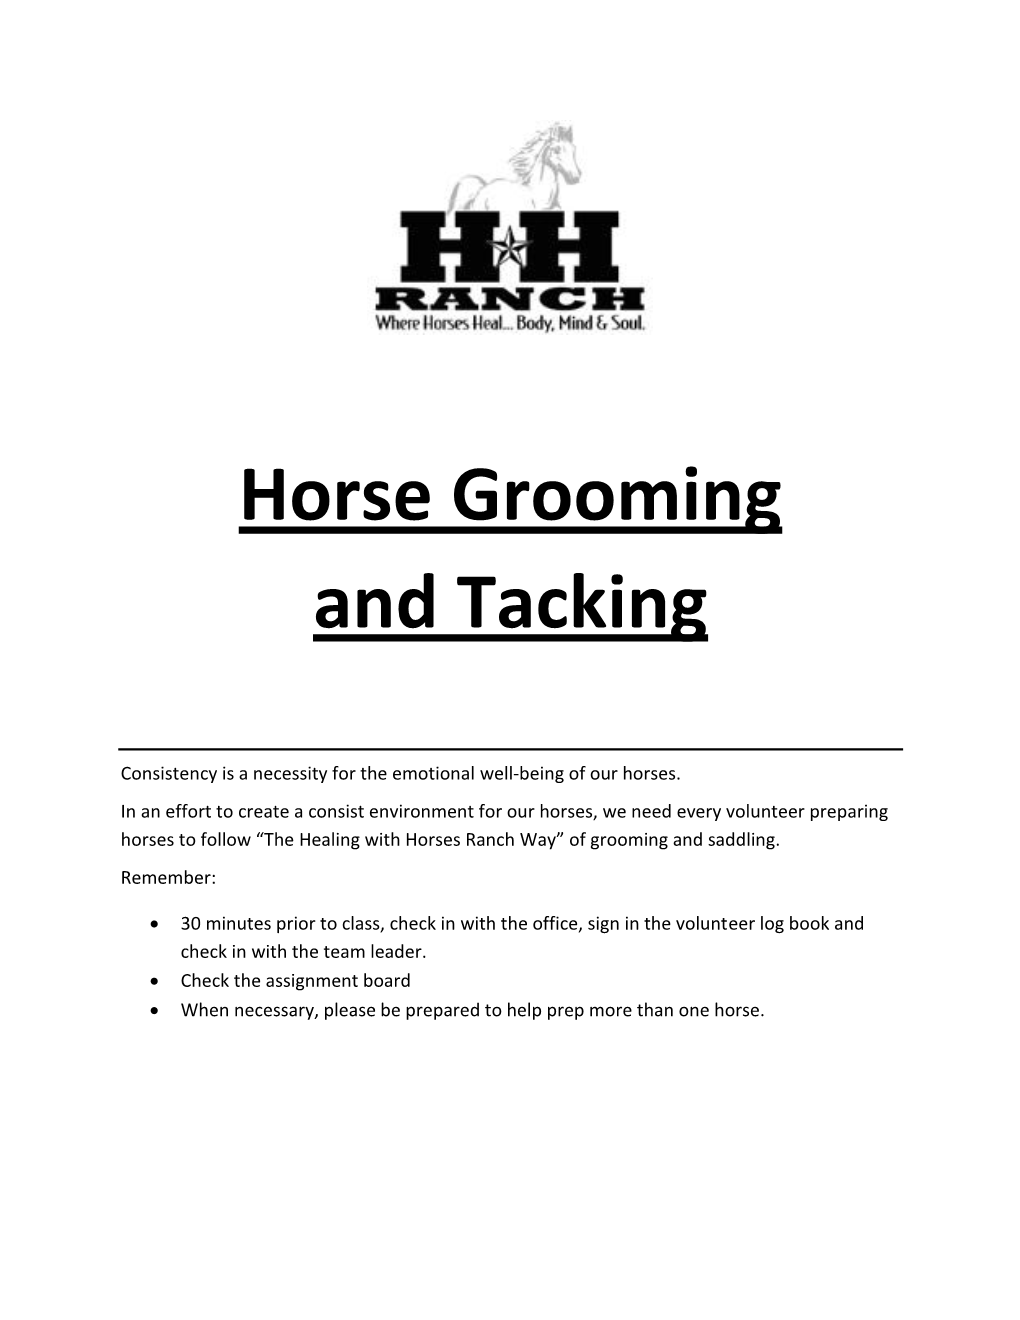 Horse Grooming and Tacking